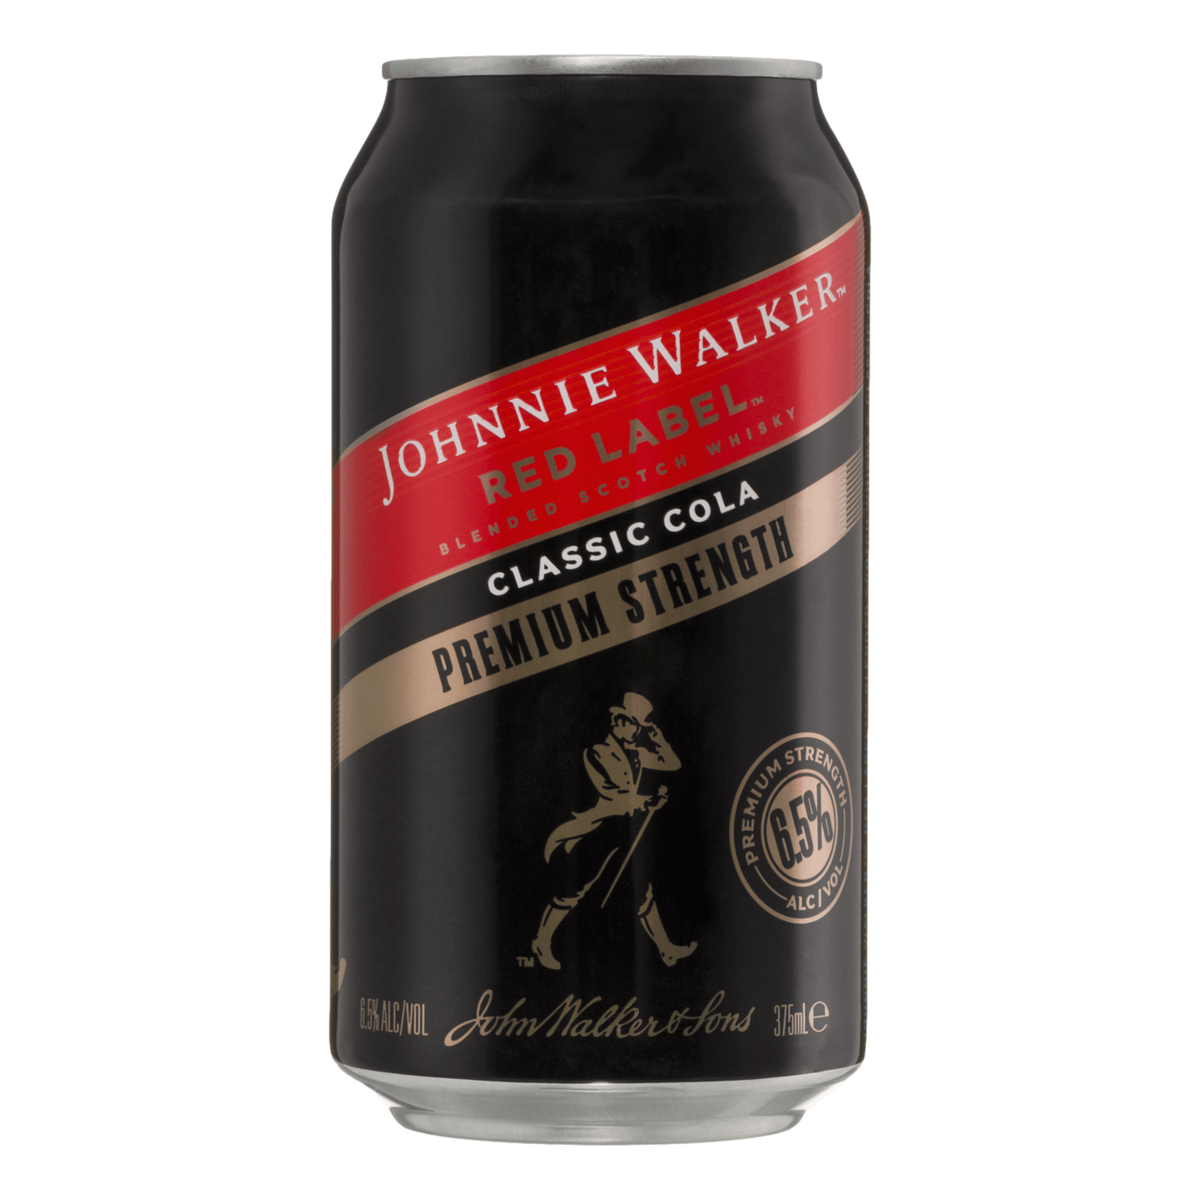 Johnnie Walker Premium & Cola 6.5% 375ml Can Single